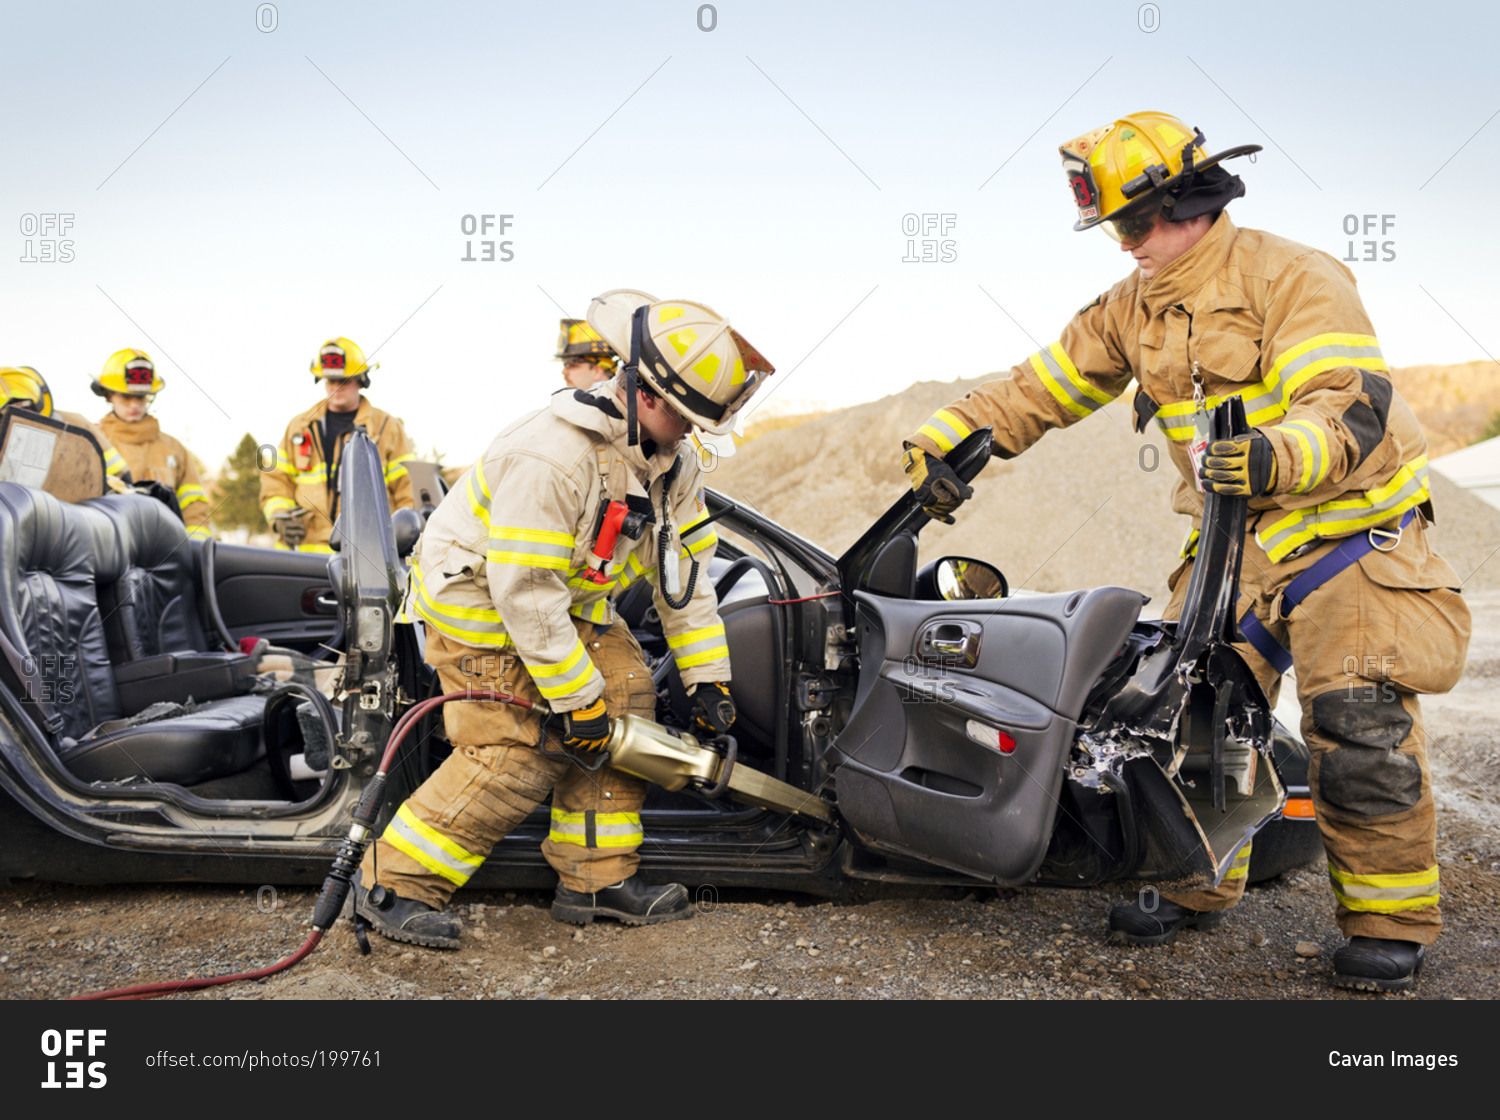 Firemen practice disassembling a car